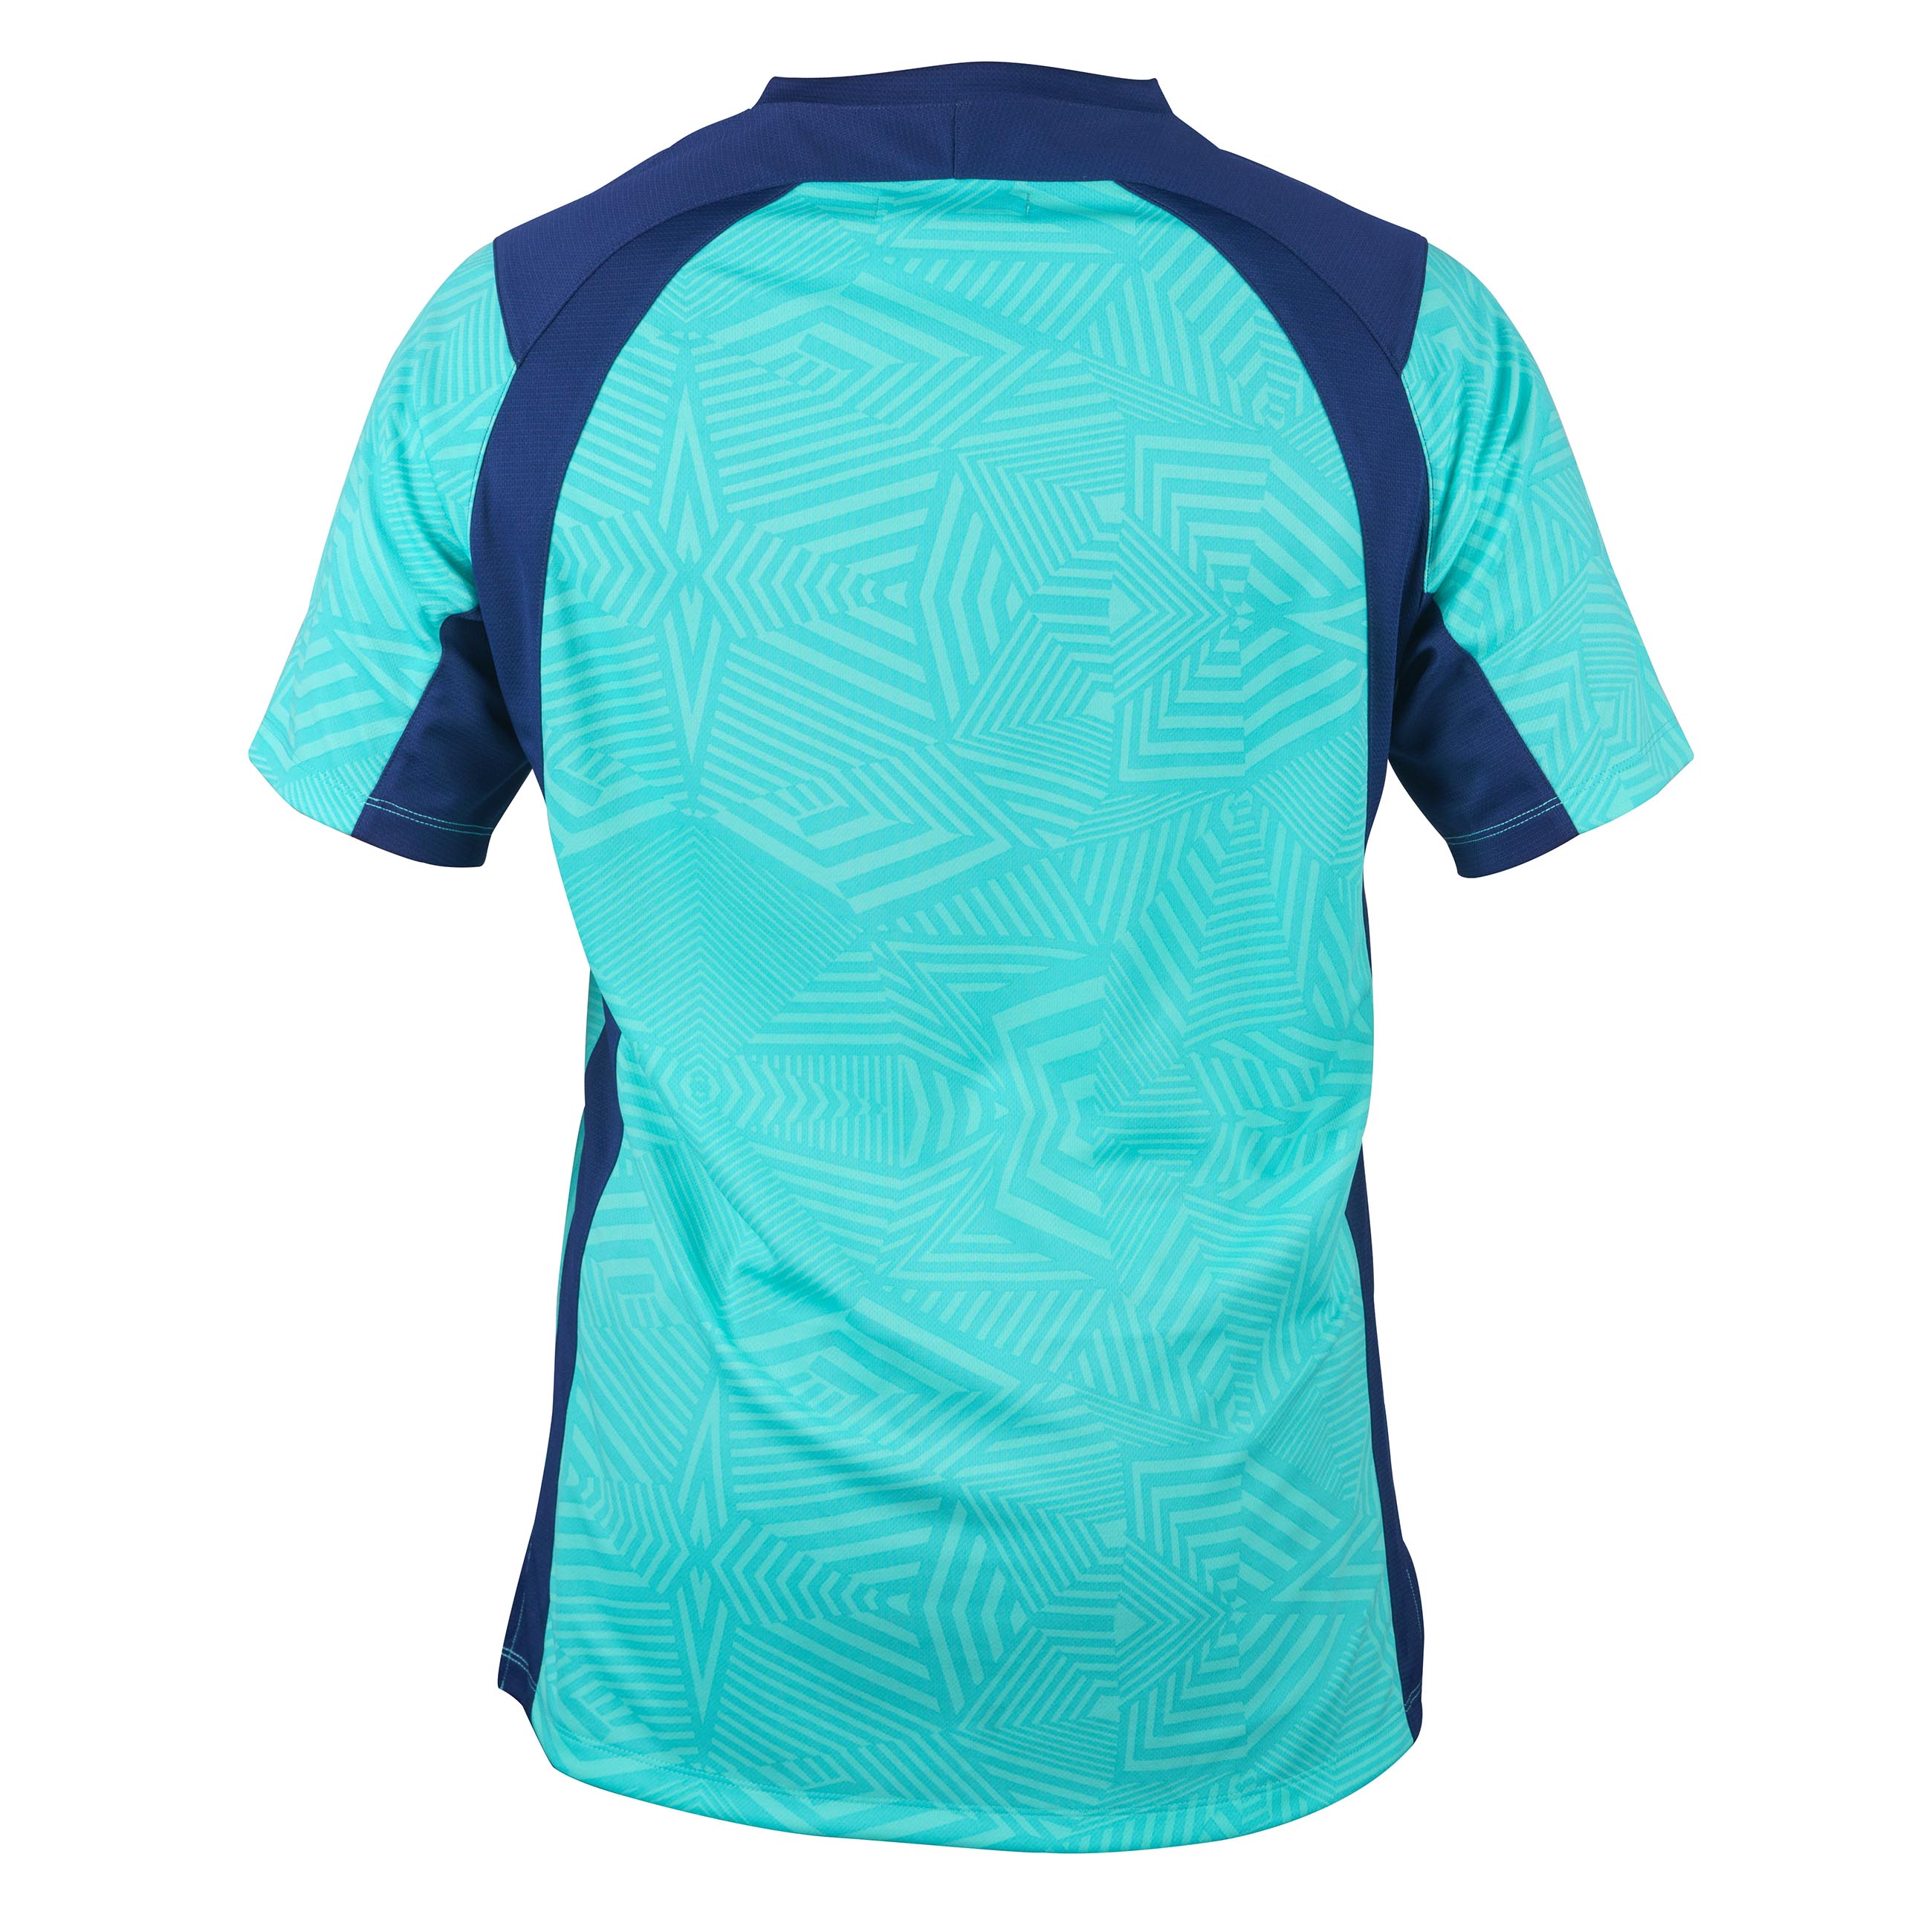 Pro T20 Short Sleeve Adult Shirt